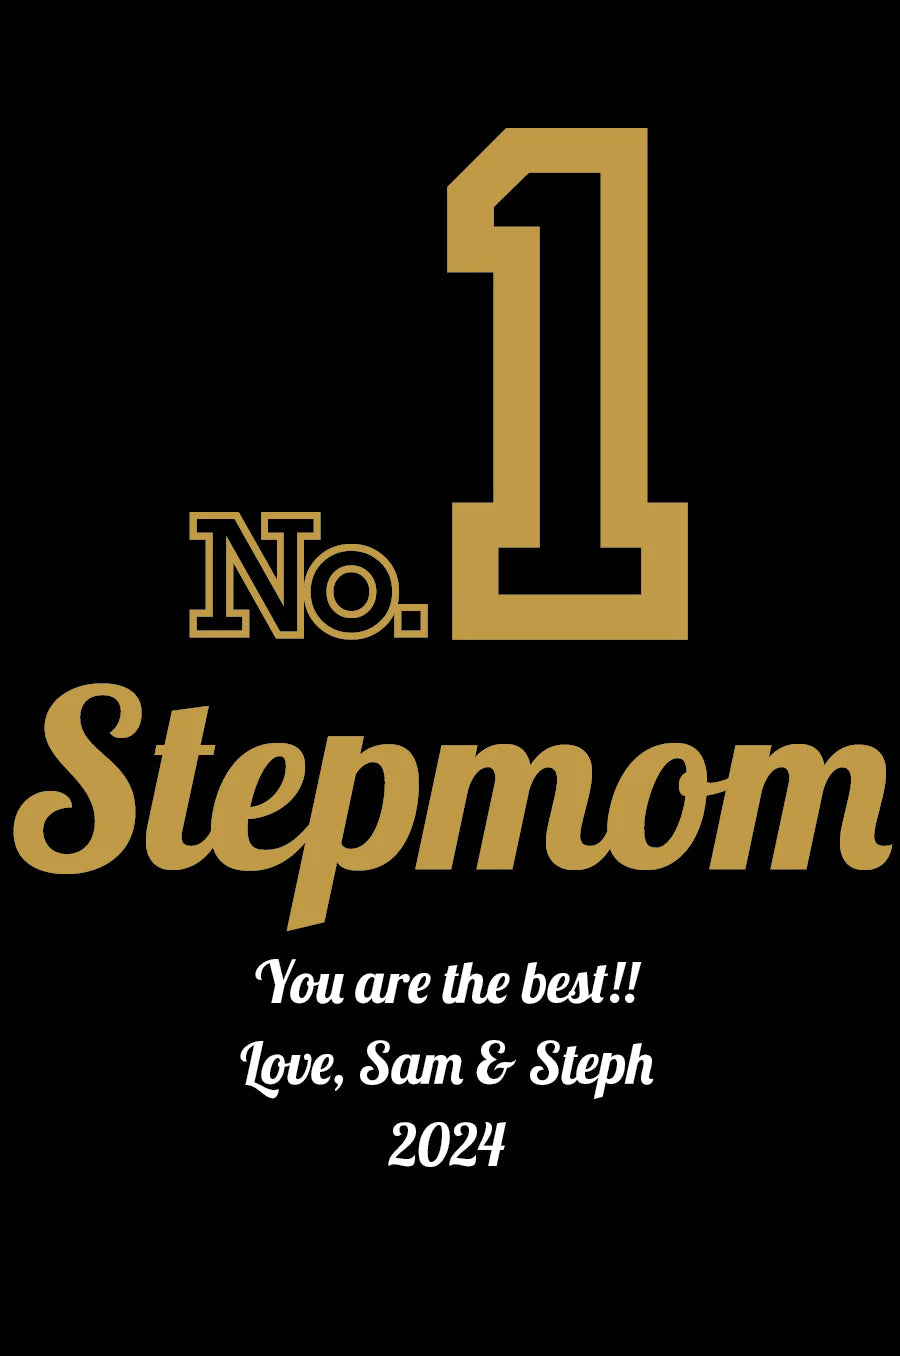 Number 1 Stepmom